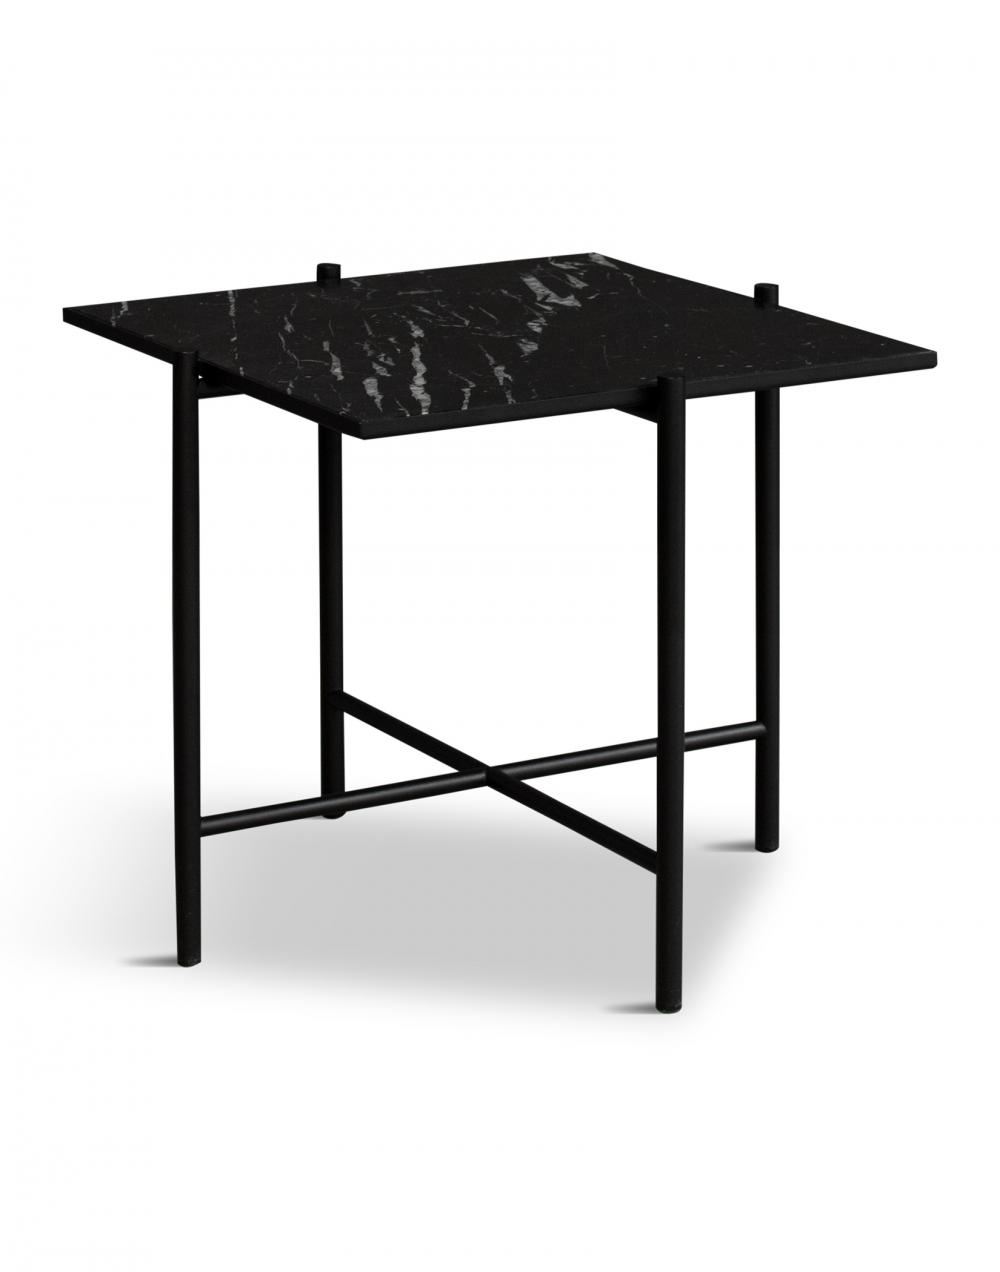 Handvark Side Table Black Marble Designer Furniture From Holloways Of Ludlow